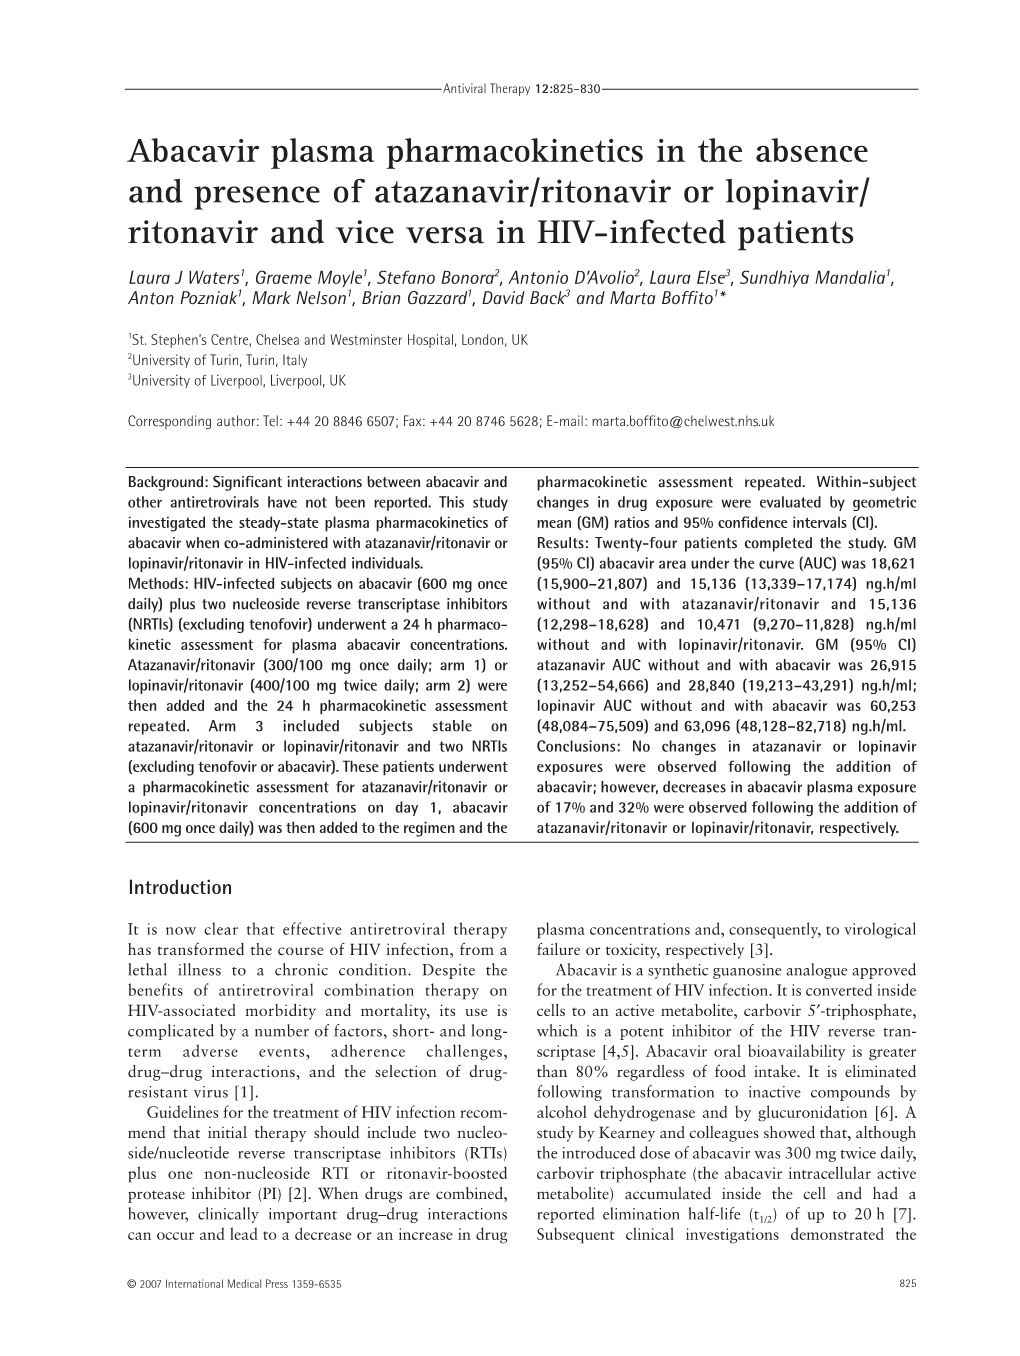 Abacavir Plasma Pharmacokinetics in the Absence and Presence of Atazanavir/Ritonavir Or Lopinavir/ Ritonavir and Vice Versa in HIV-Infected Patients